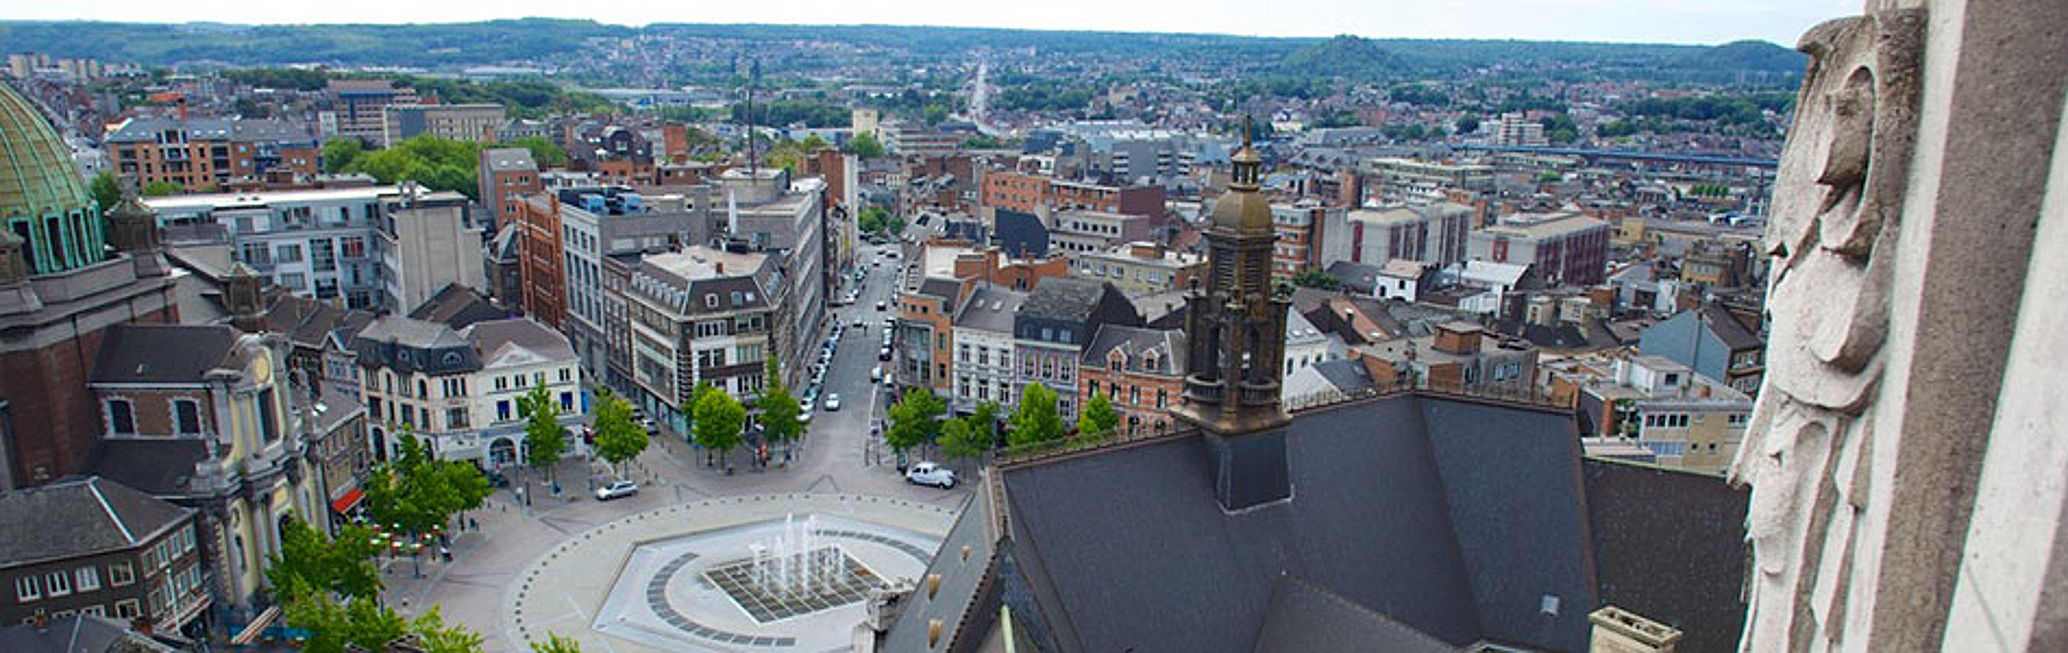  Uccle
- Vue Charleroi 3 .jpg